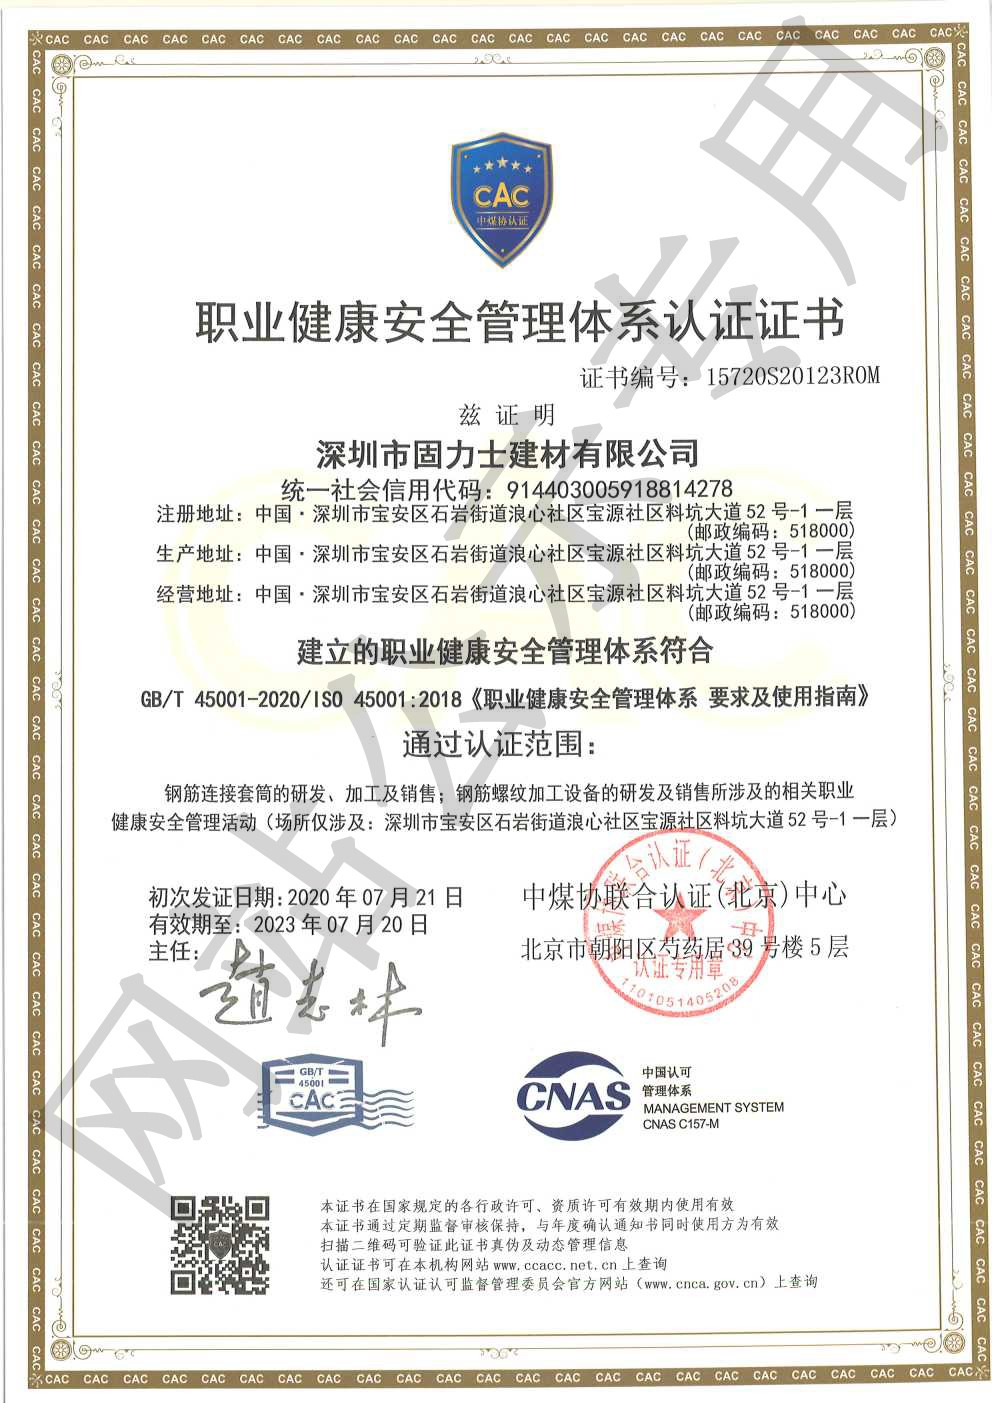 翁田镇ISO45001证书